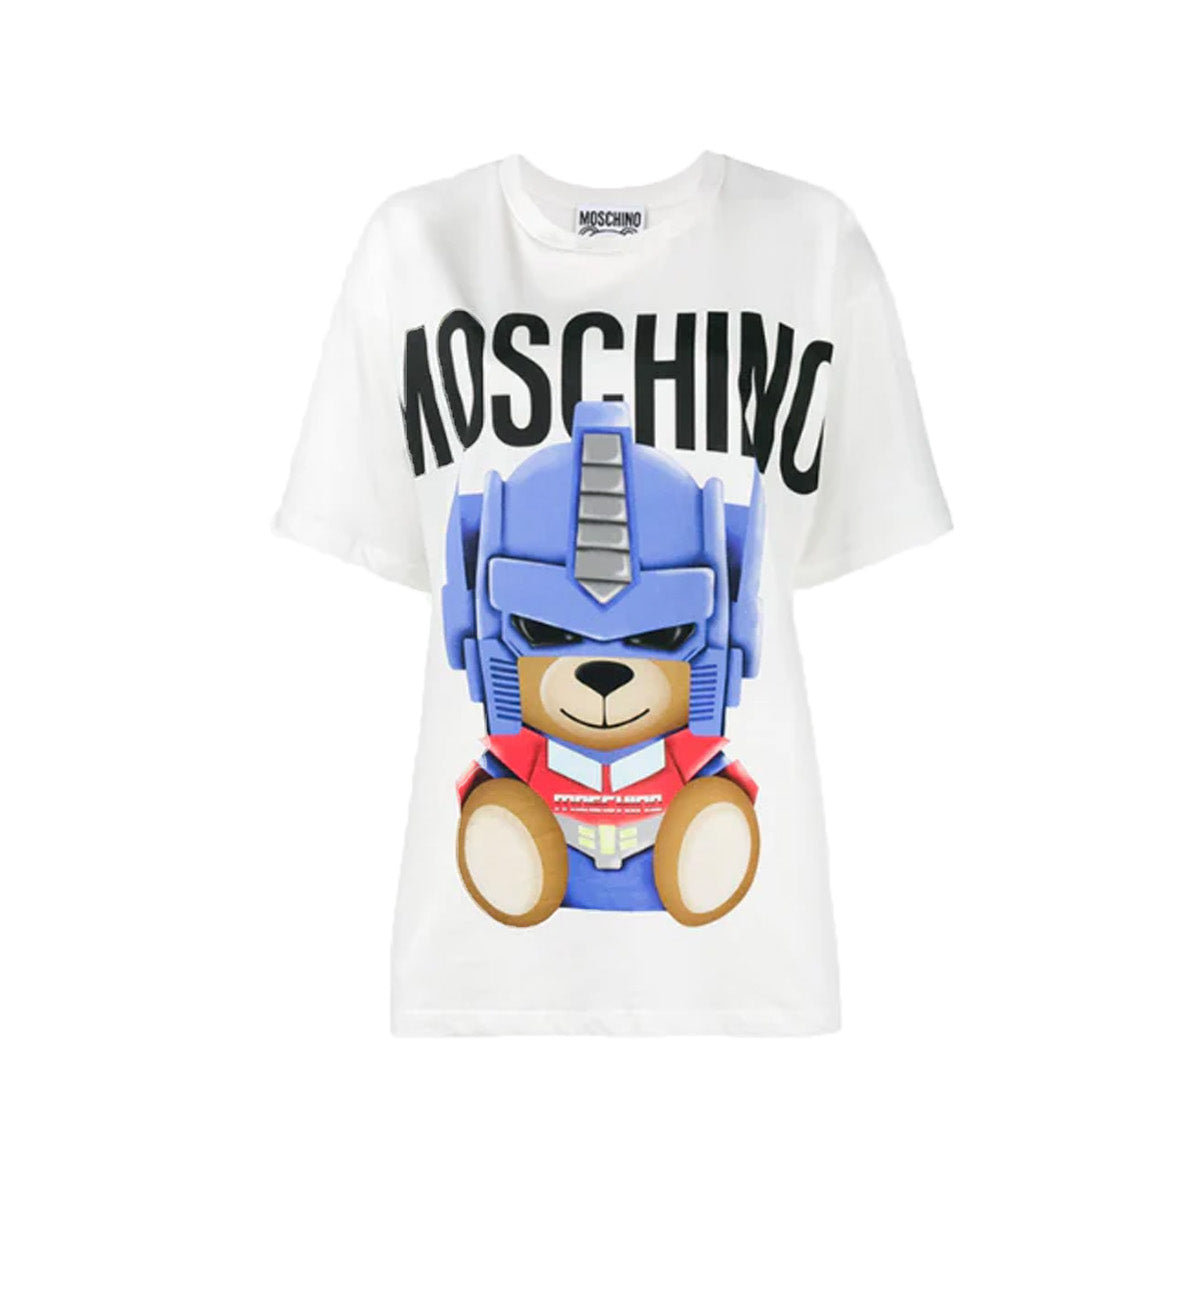 Moschino Transformer Teddy Logo T-Shirt (White)